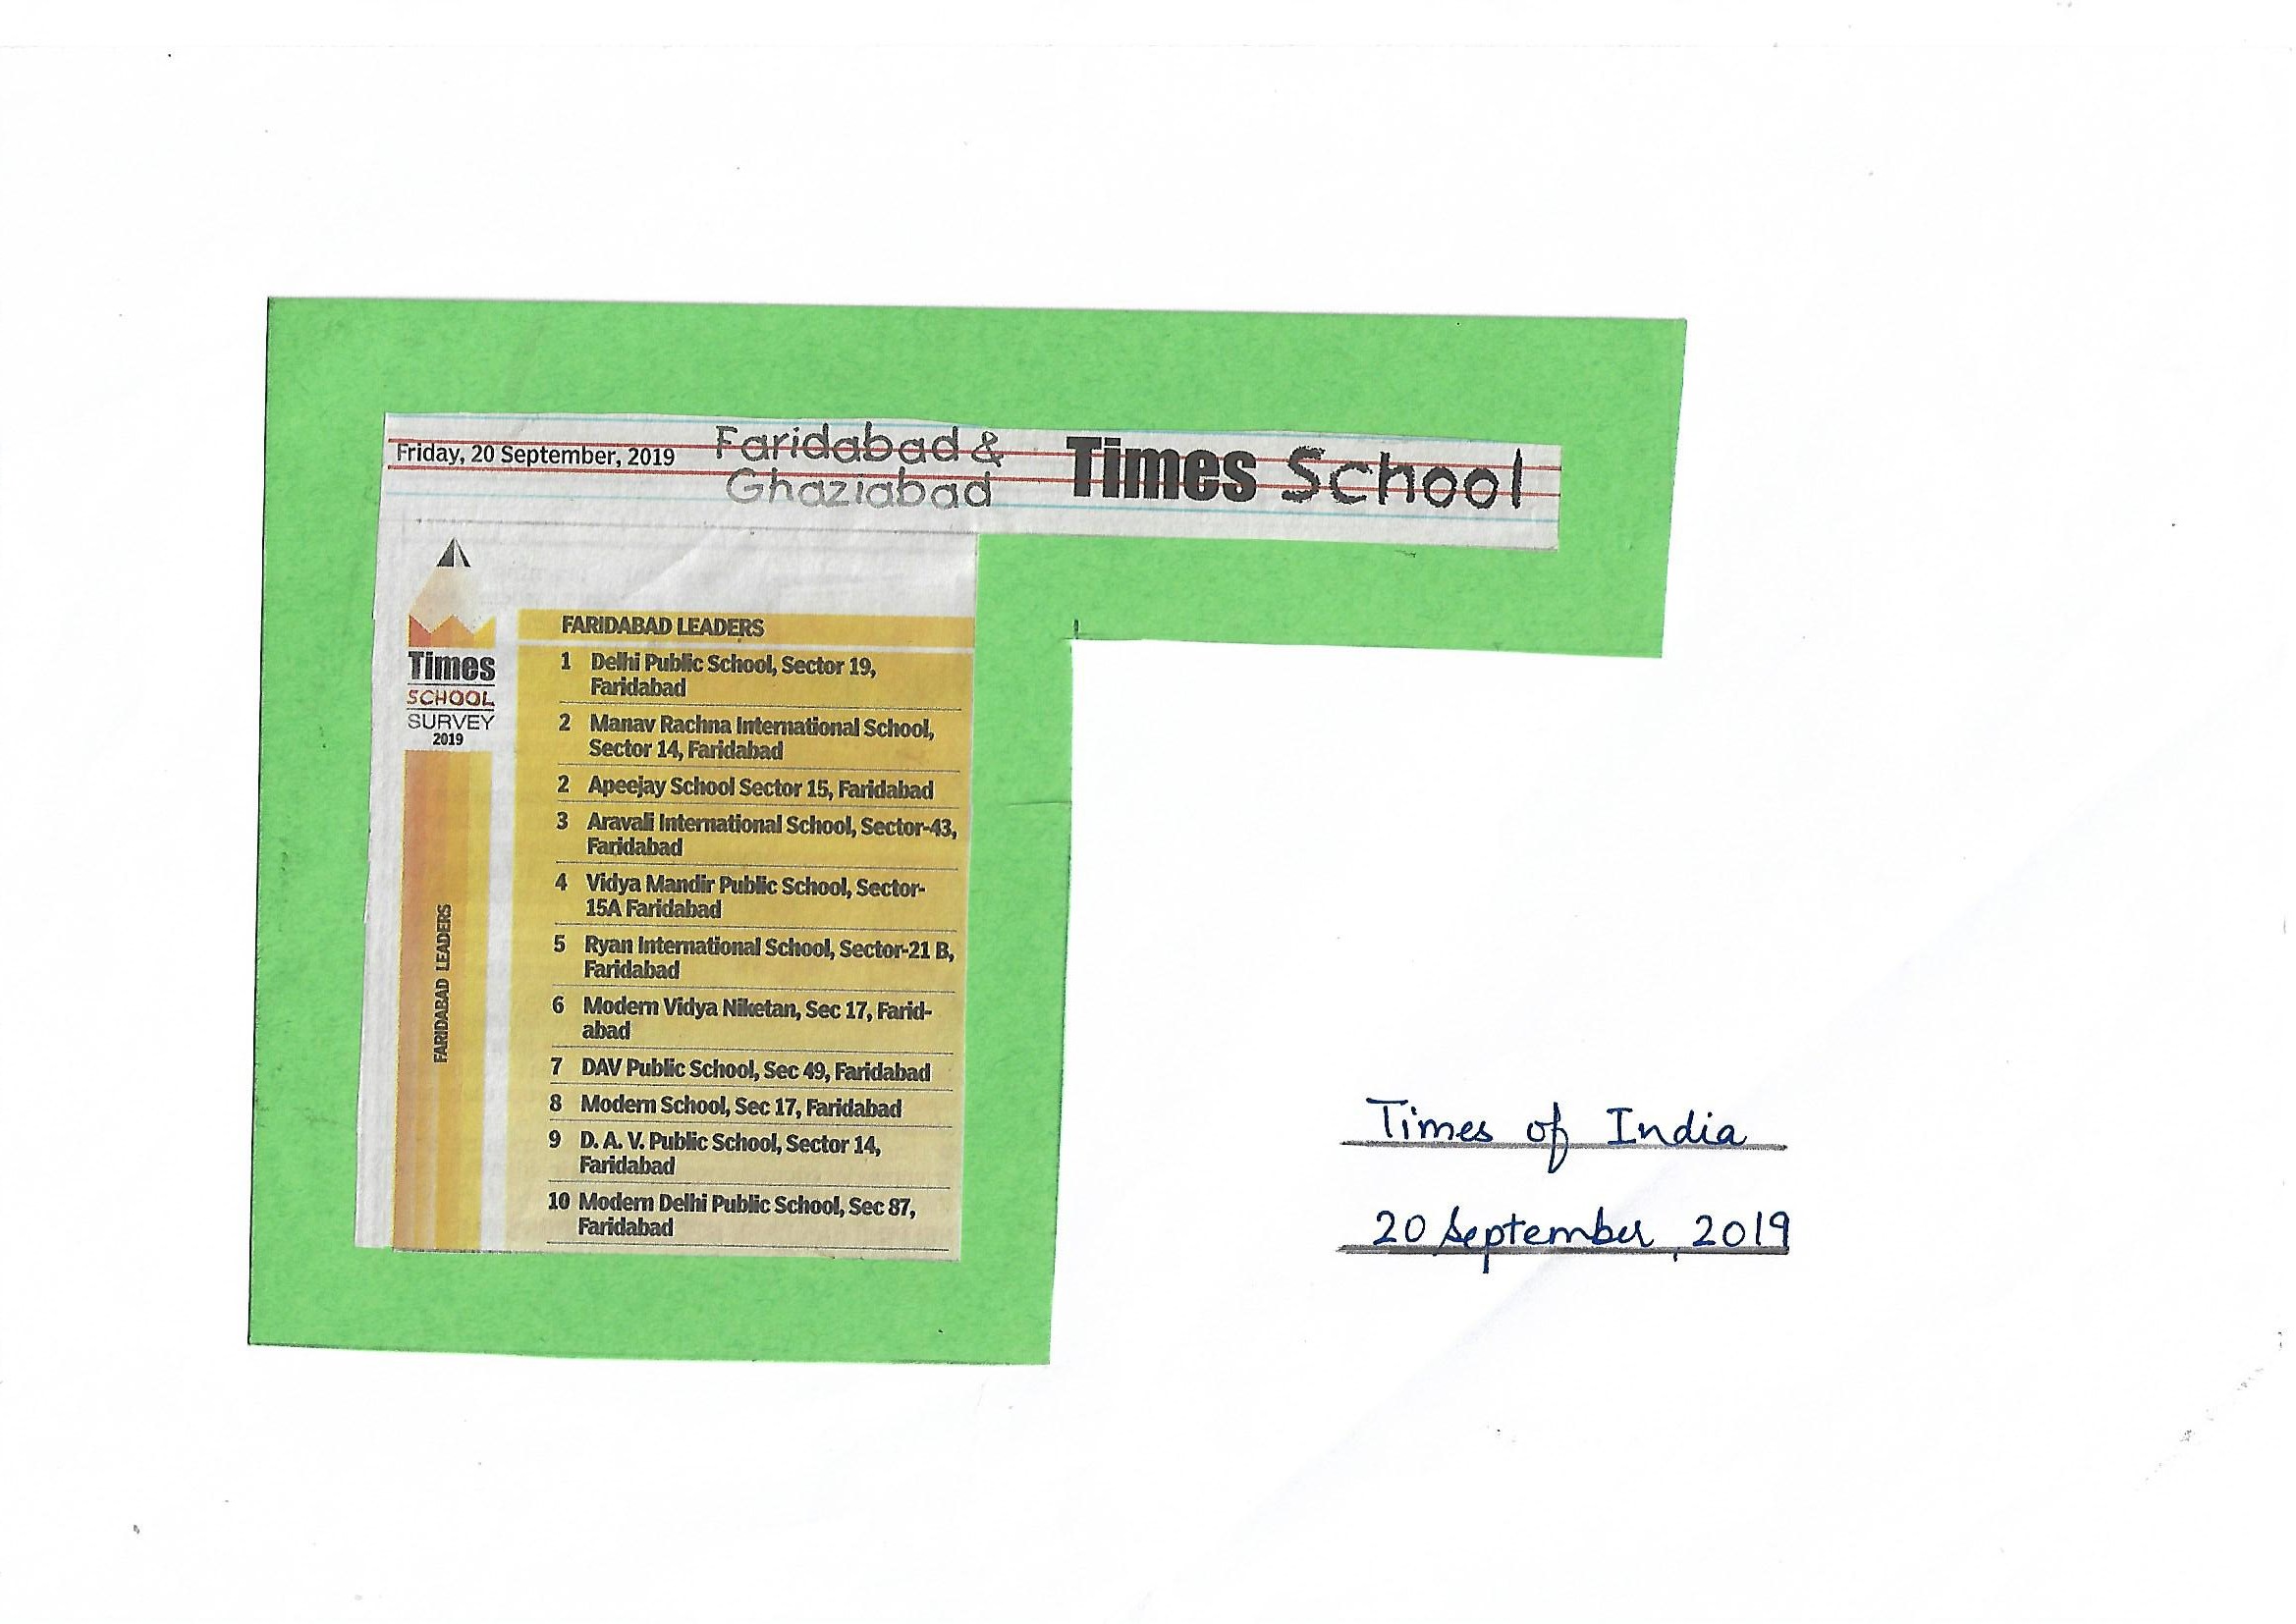 Ryan International School Faridabad ranks 5th on the Times School Survey - Ryan International School, Faridabad